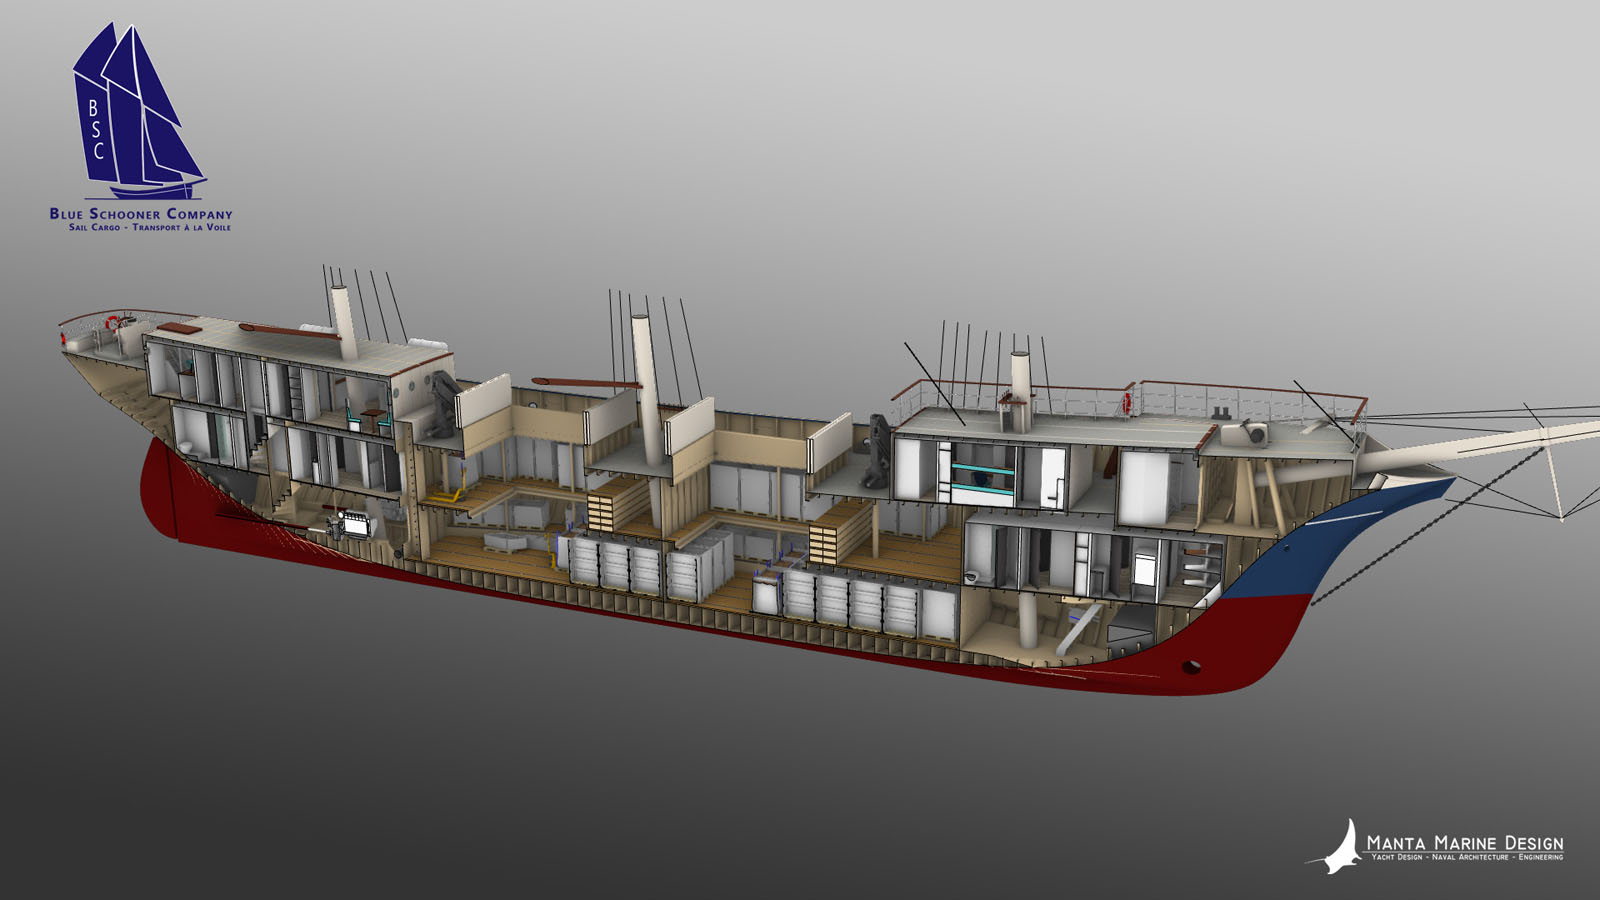 MantaMarineDesign-SailingCargoVessel-Halifax-BlueSchoonerCompany-4.jpg